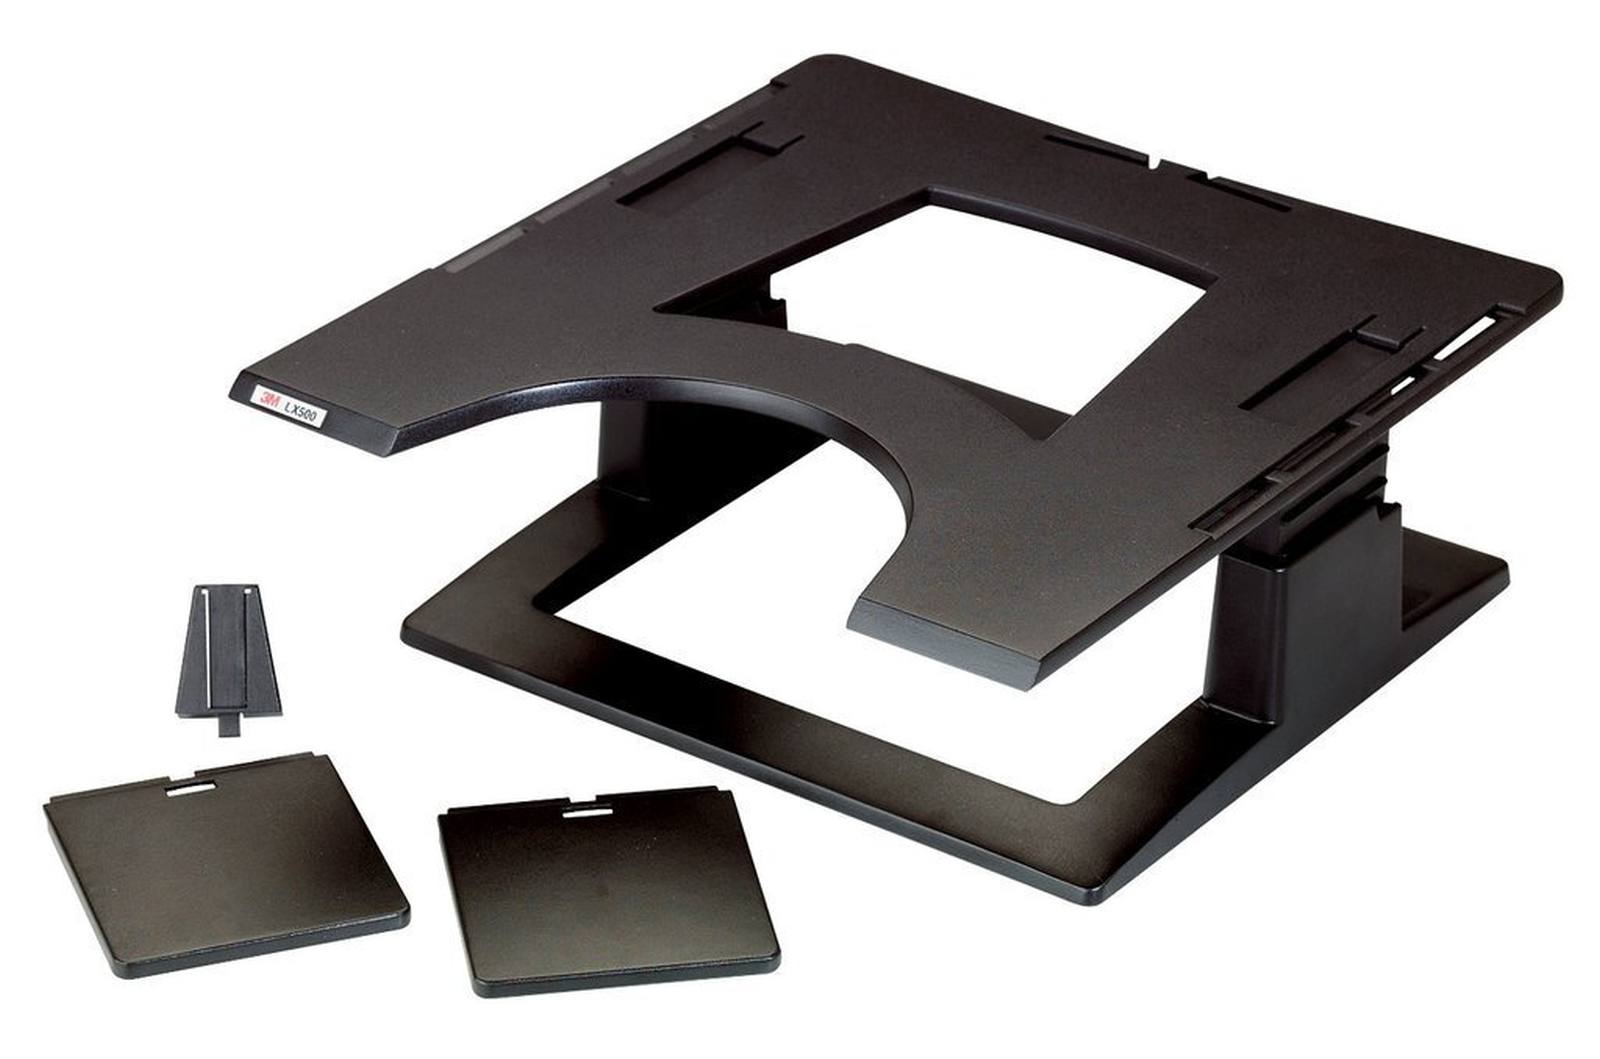 3M Notebook stand LX500, 32.0 cm x 32.0 cm x 10.2 - 15.2 cm, black, 1 notebook stand